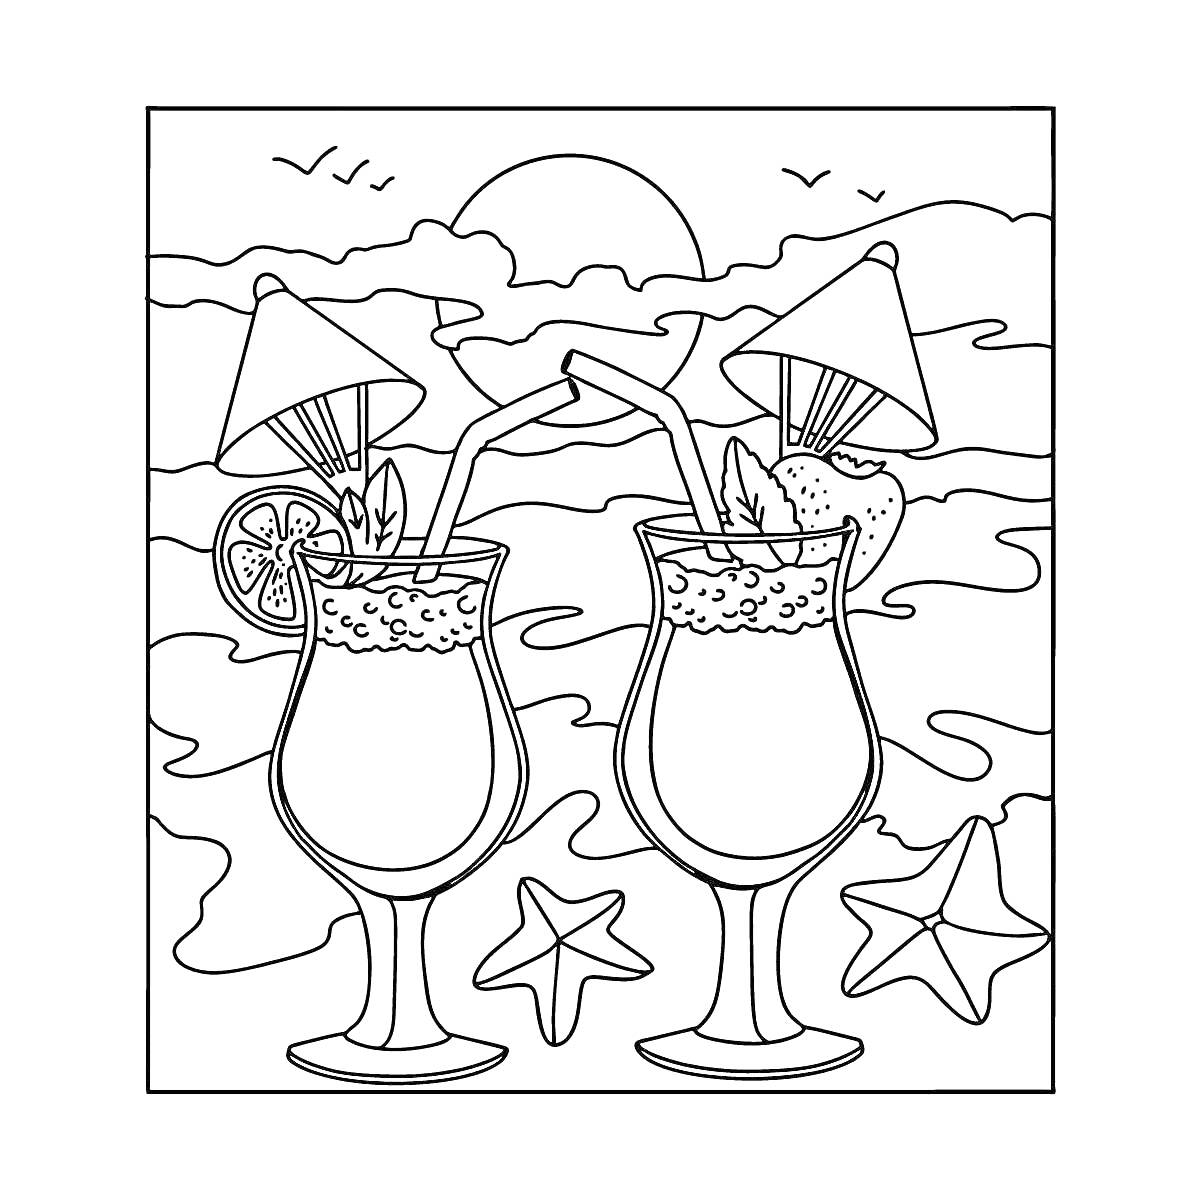 Раскраска Два коктейля с соломинками, зонтиками и фруктами на фоне заката у моря с морскими звездами